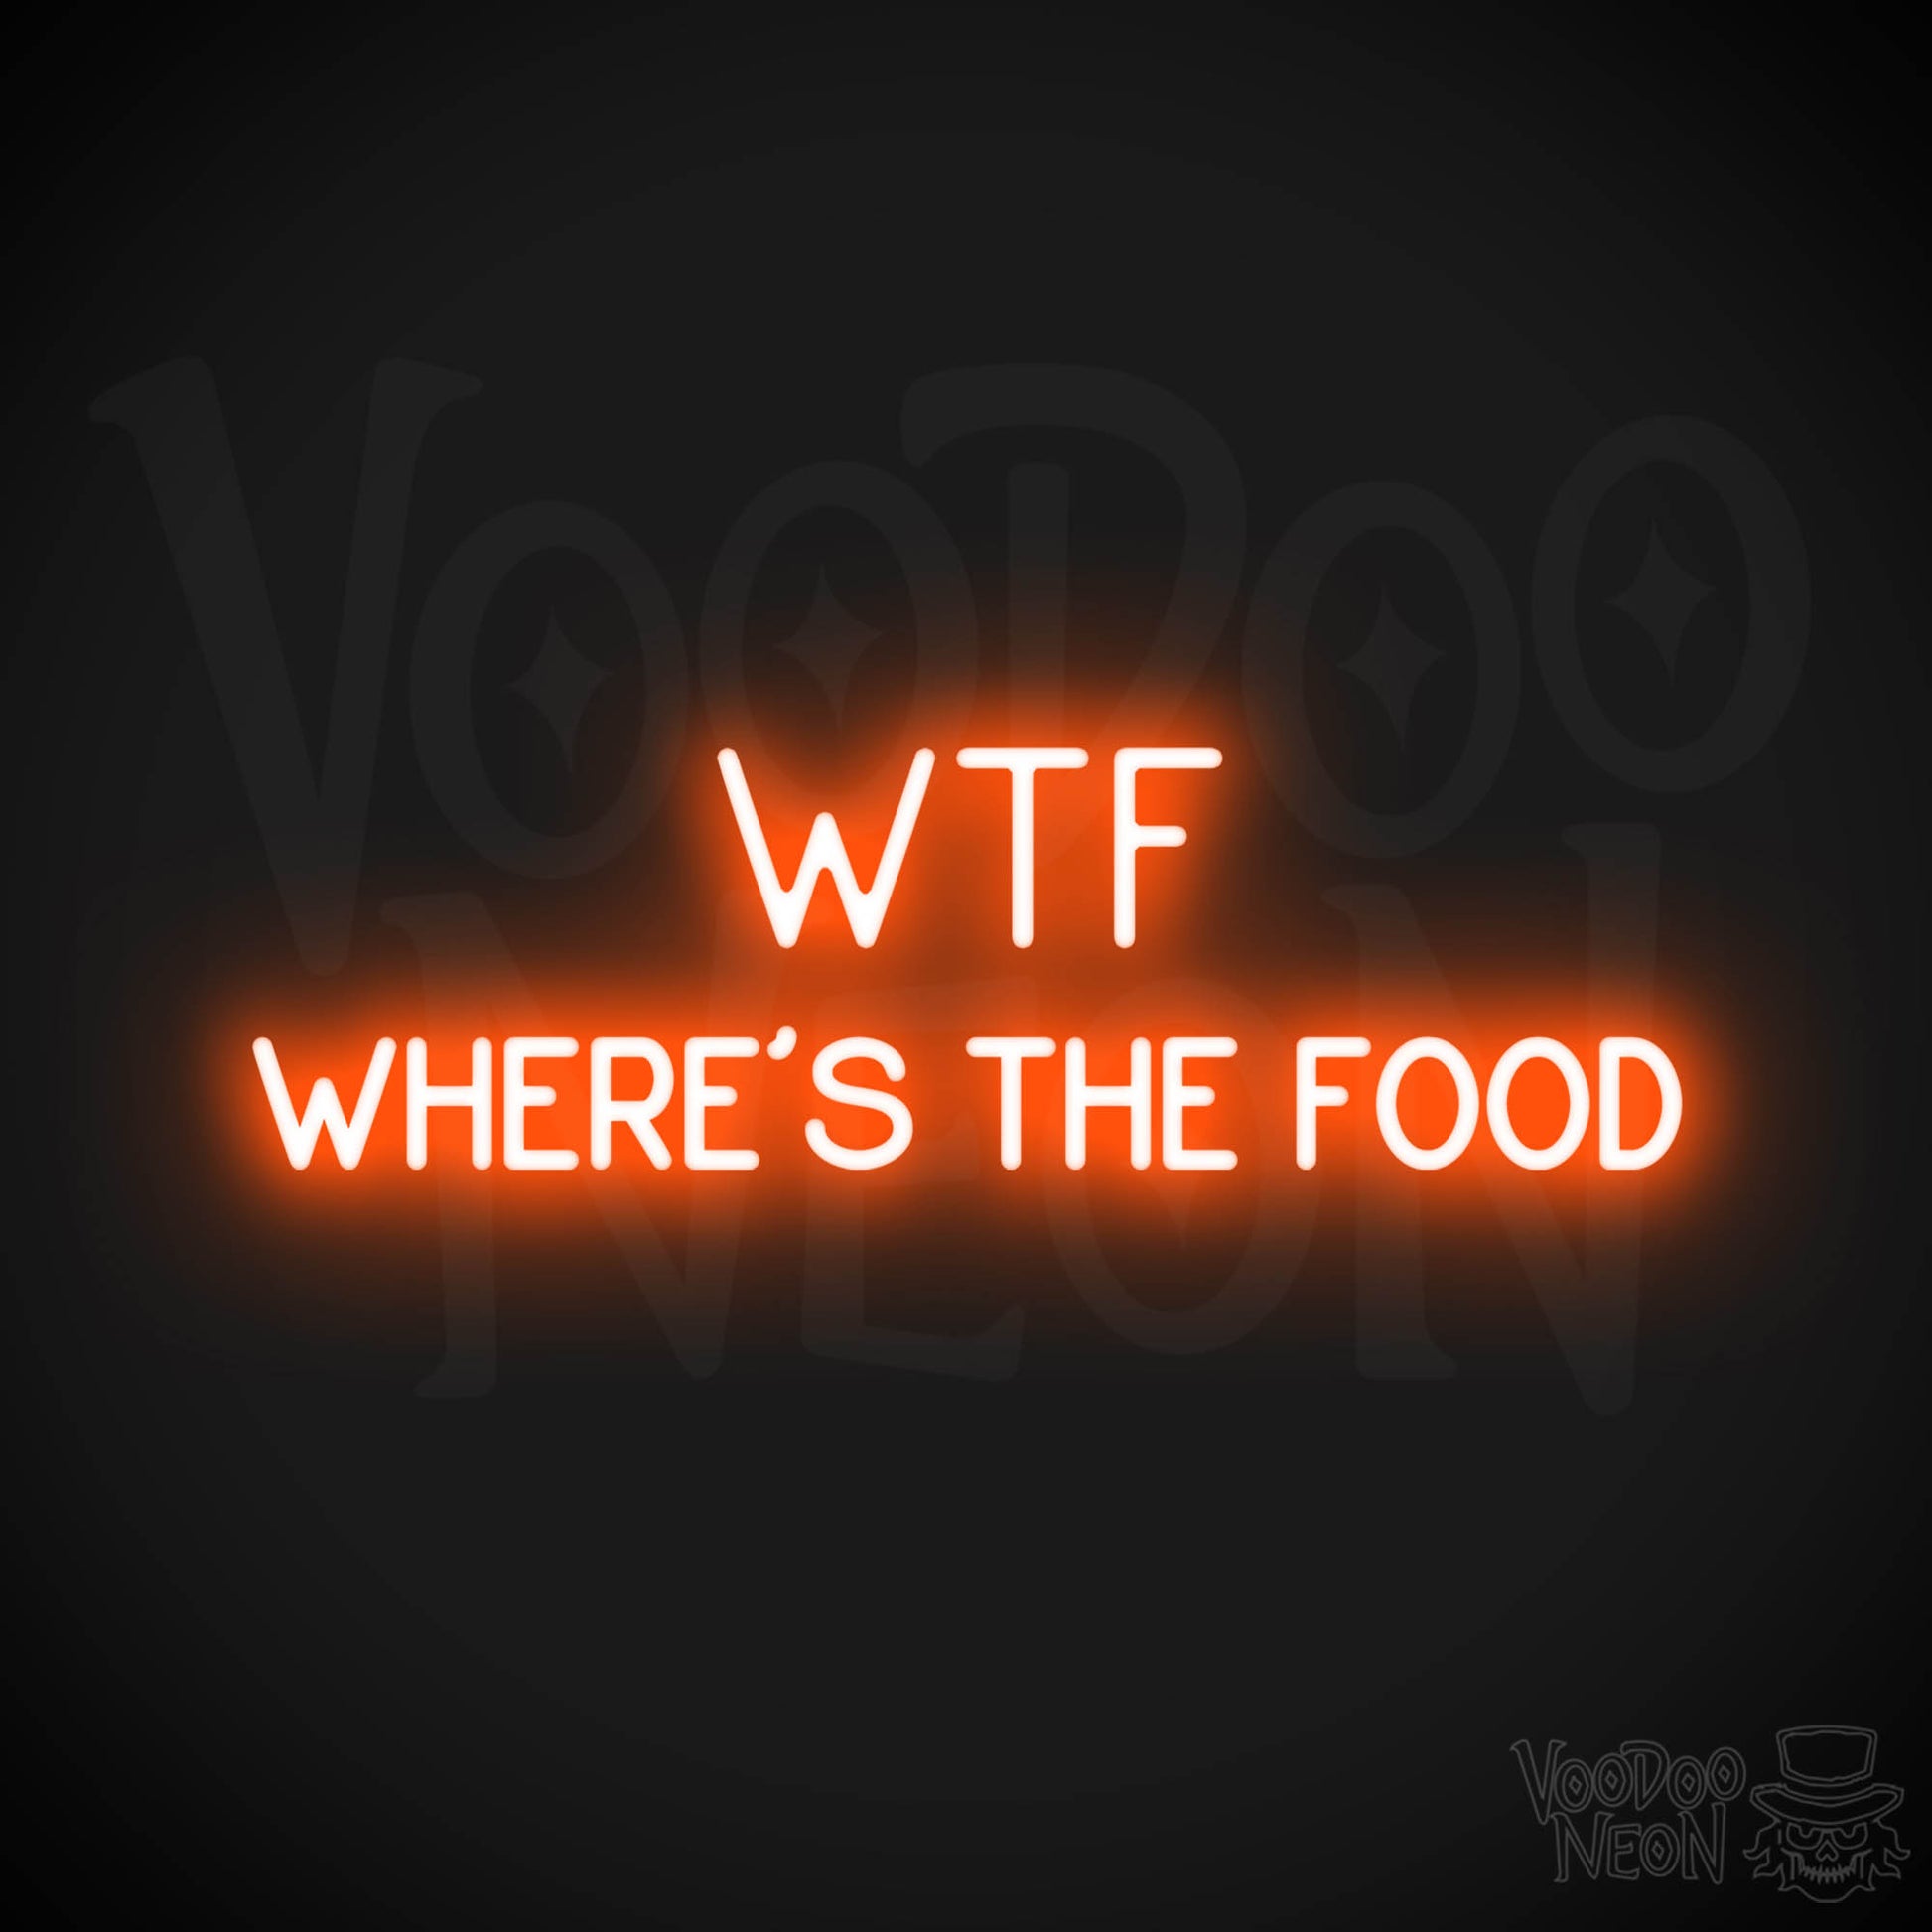 Wtf (Wheres The Food) LED Neon - Orange